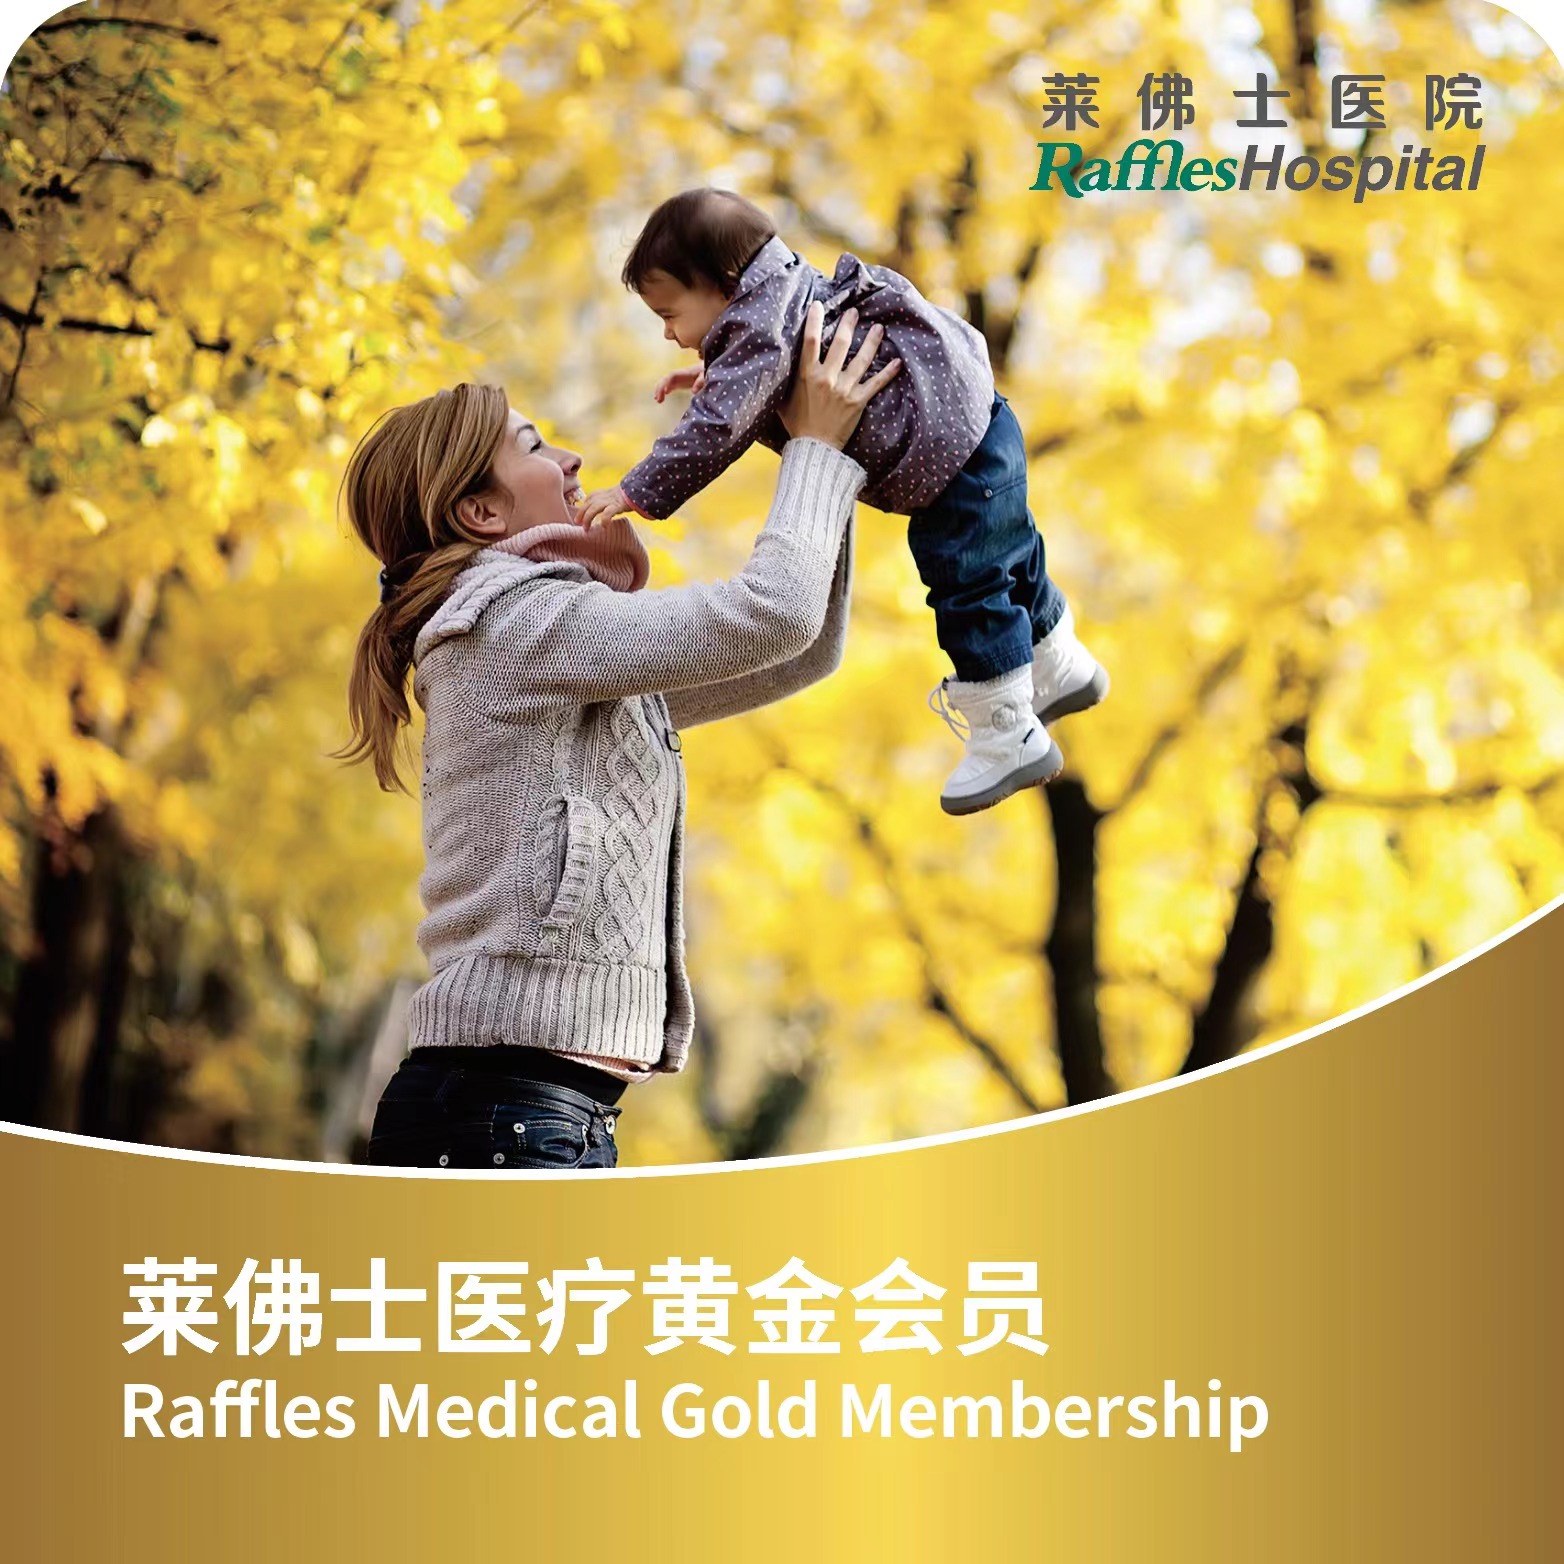 Raffles Hospital Beijing - Member Services - Raffles Gold Membership